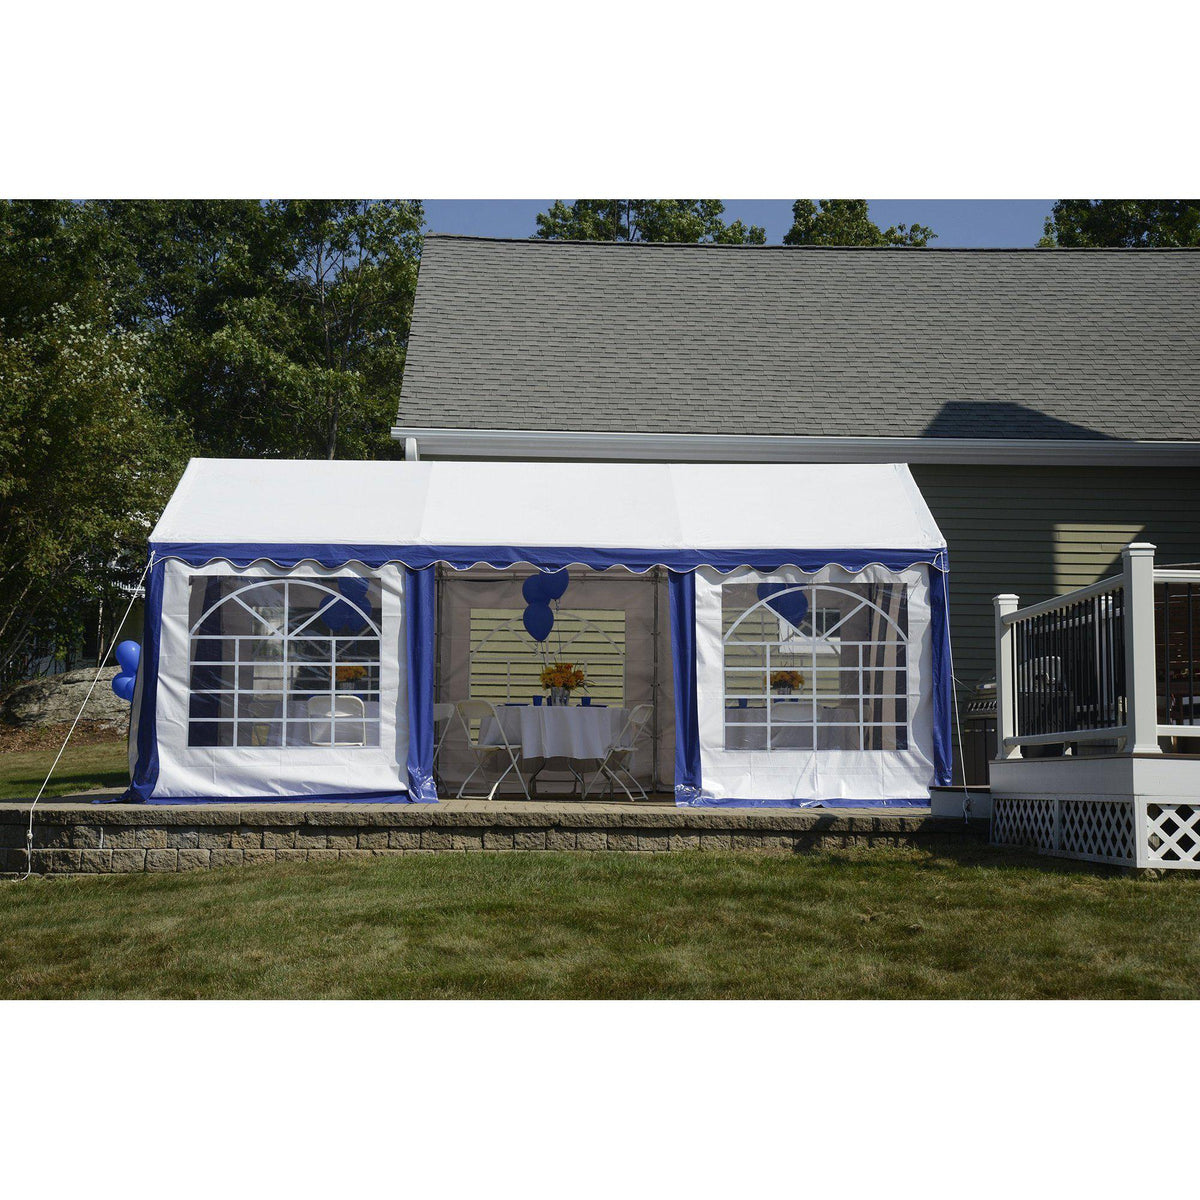 ShelterLogic Party Tent with Enclosure Kit, Blue/White, 10 x 20 ft.